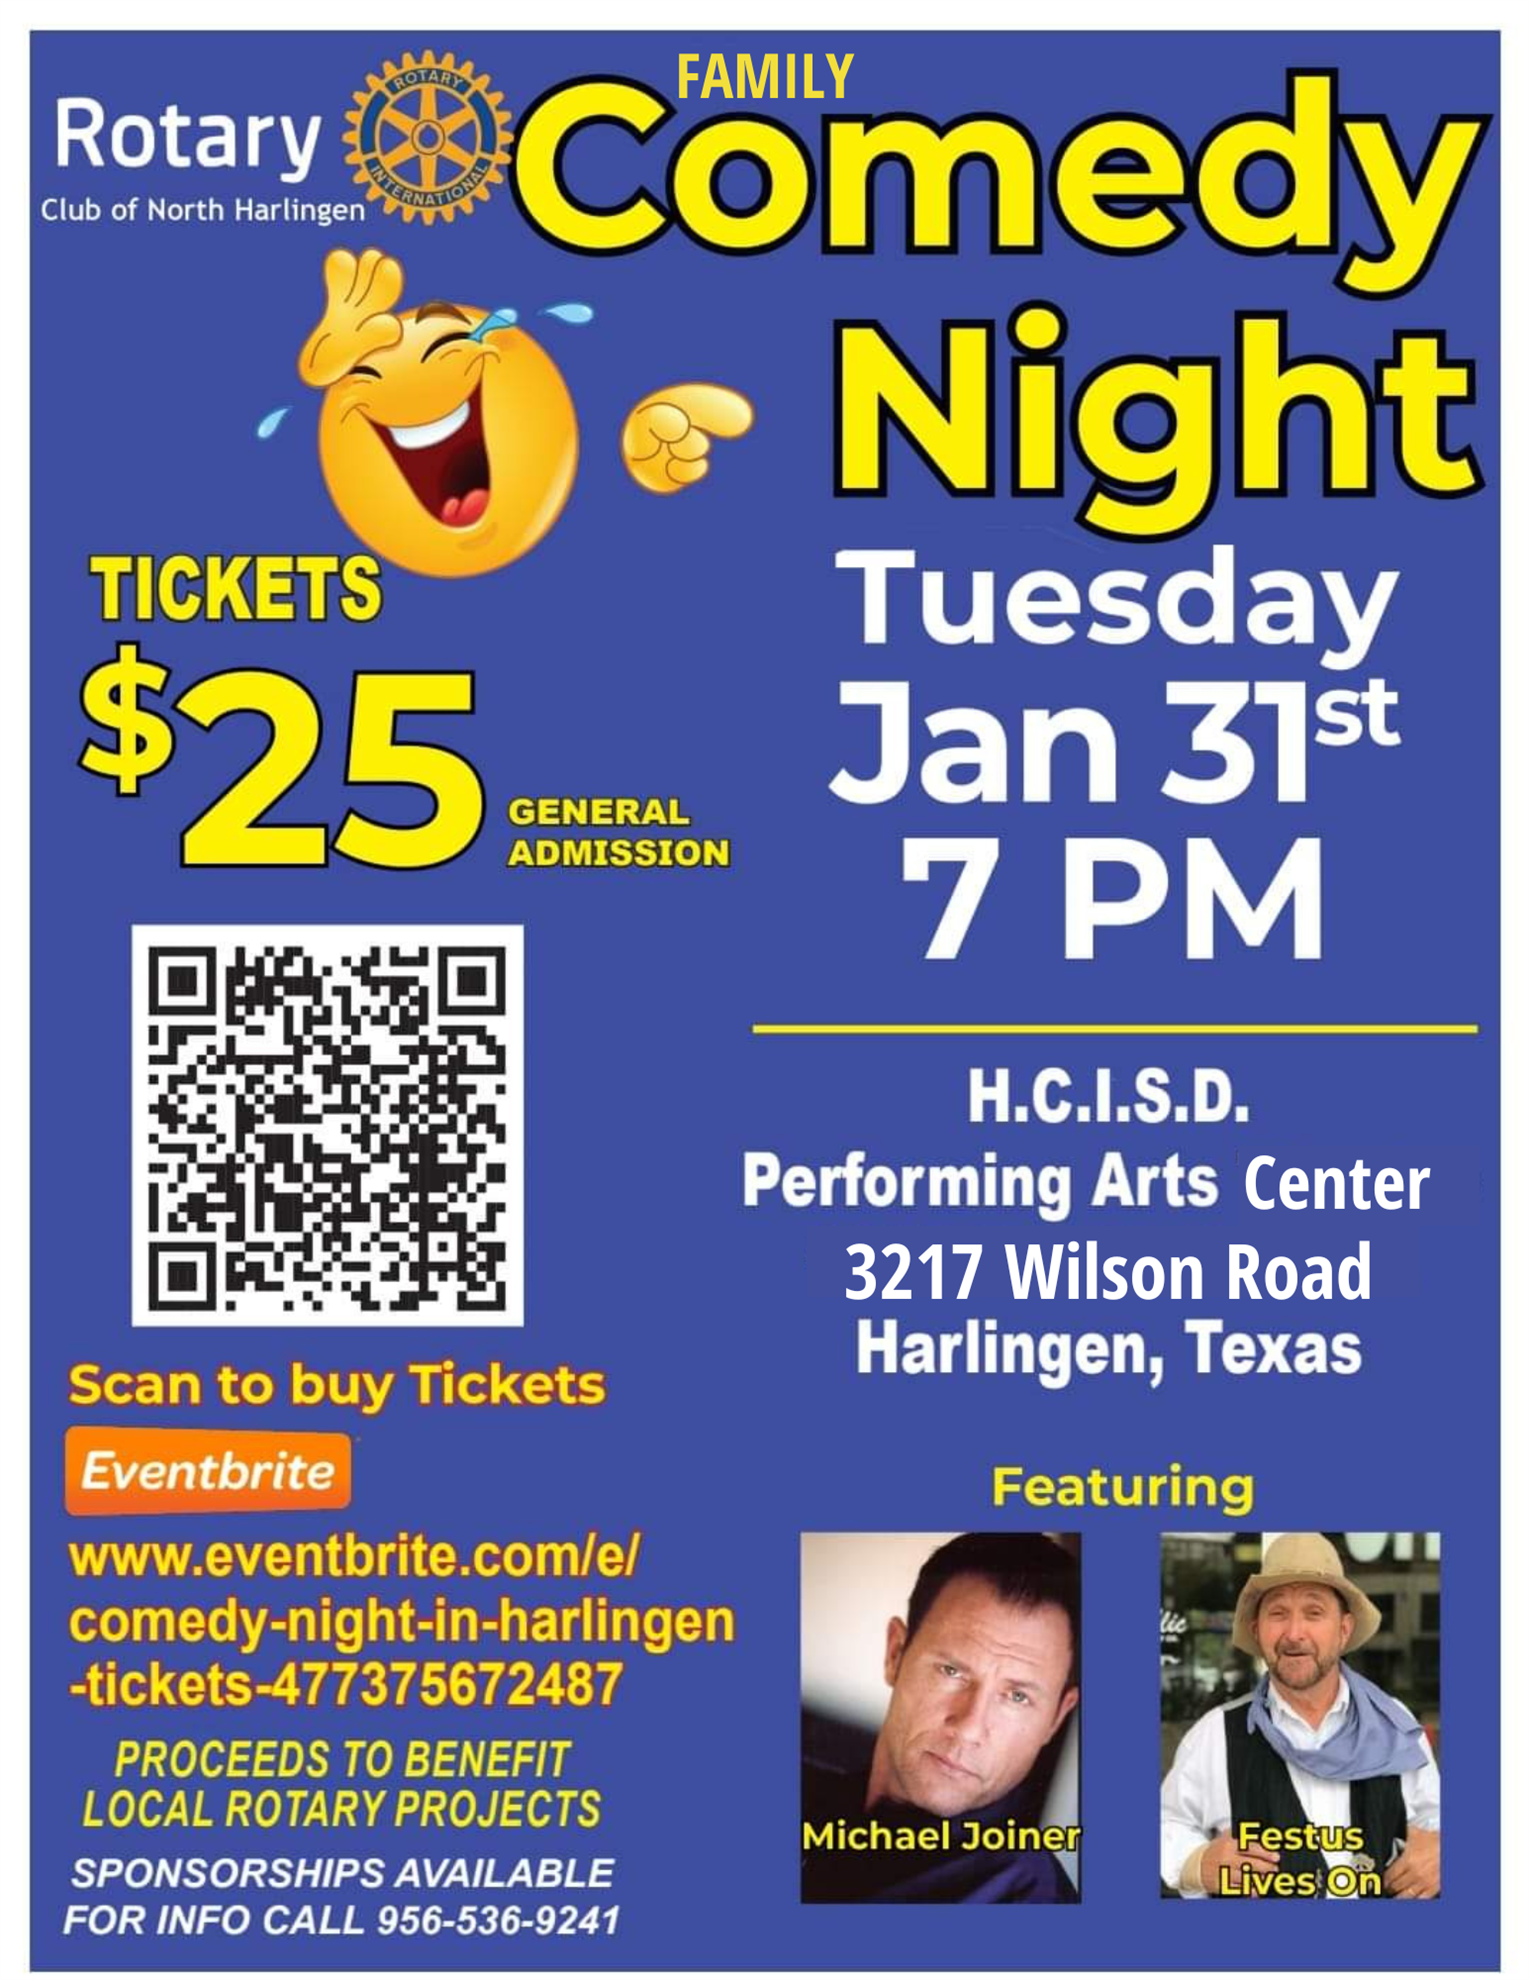 comedy night fundraiser flyer